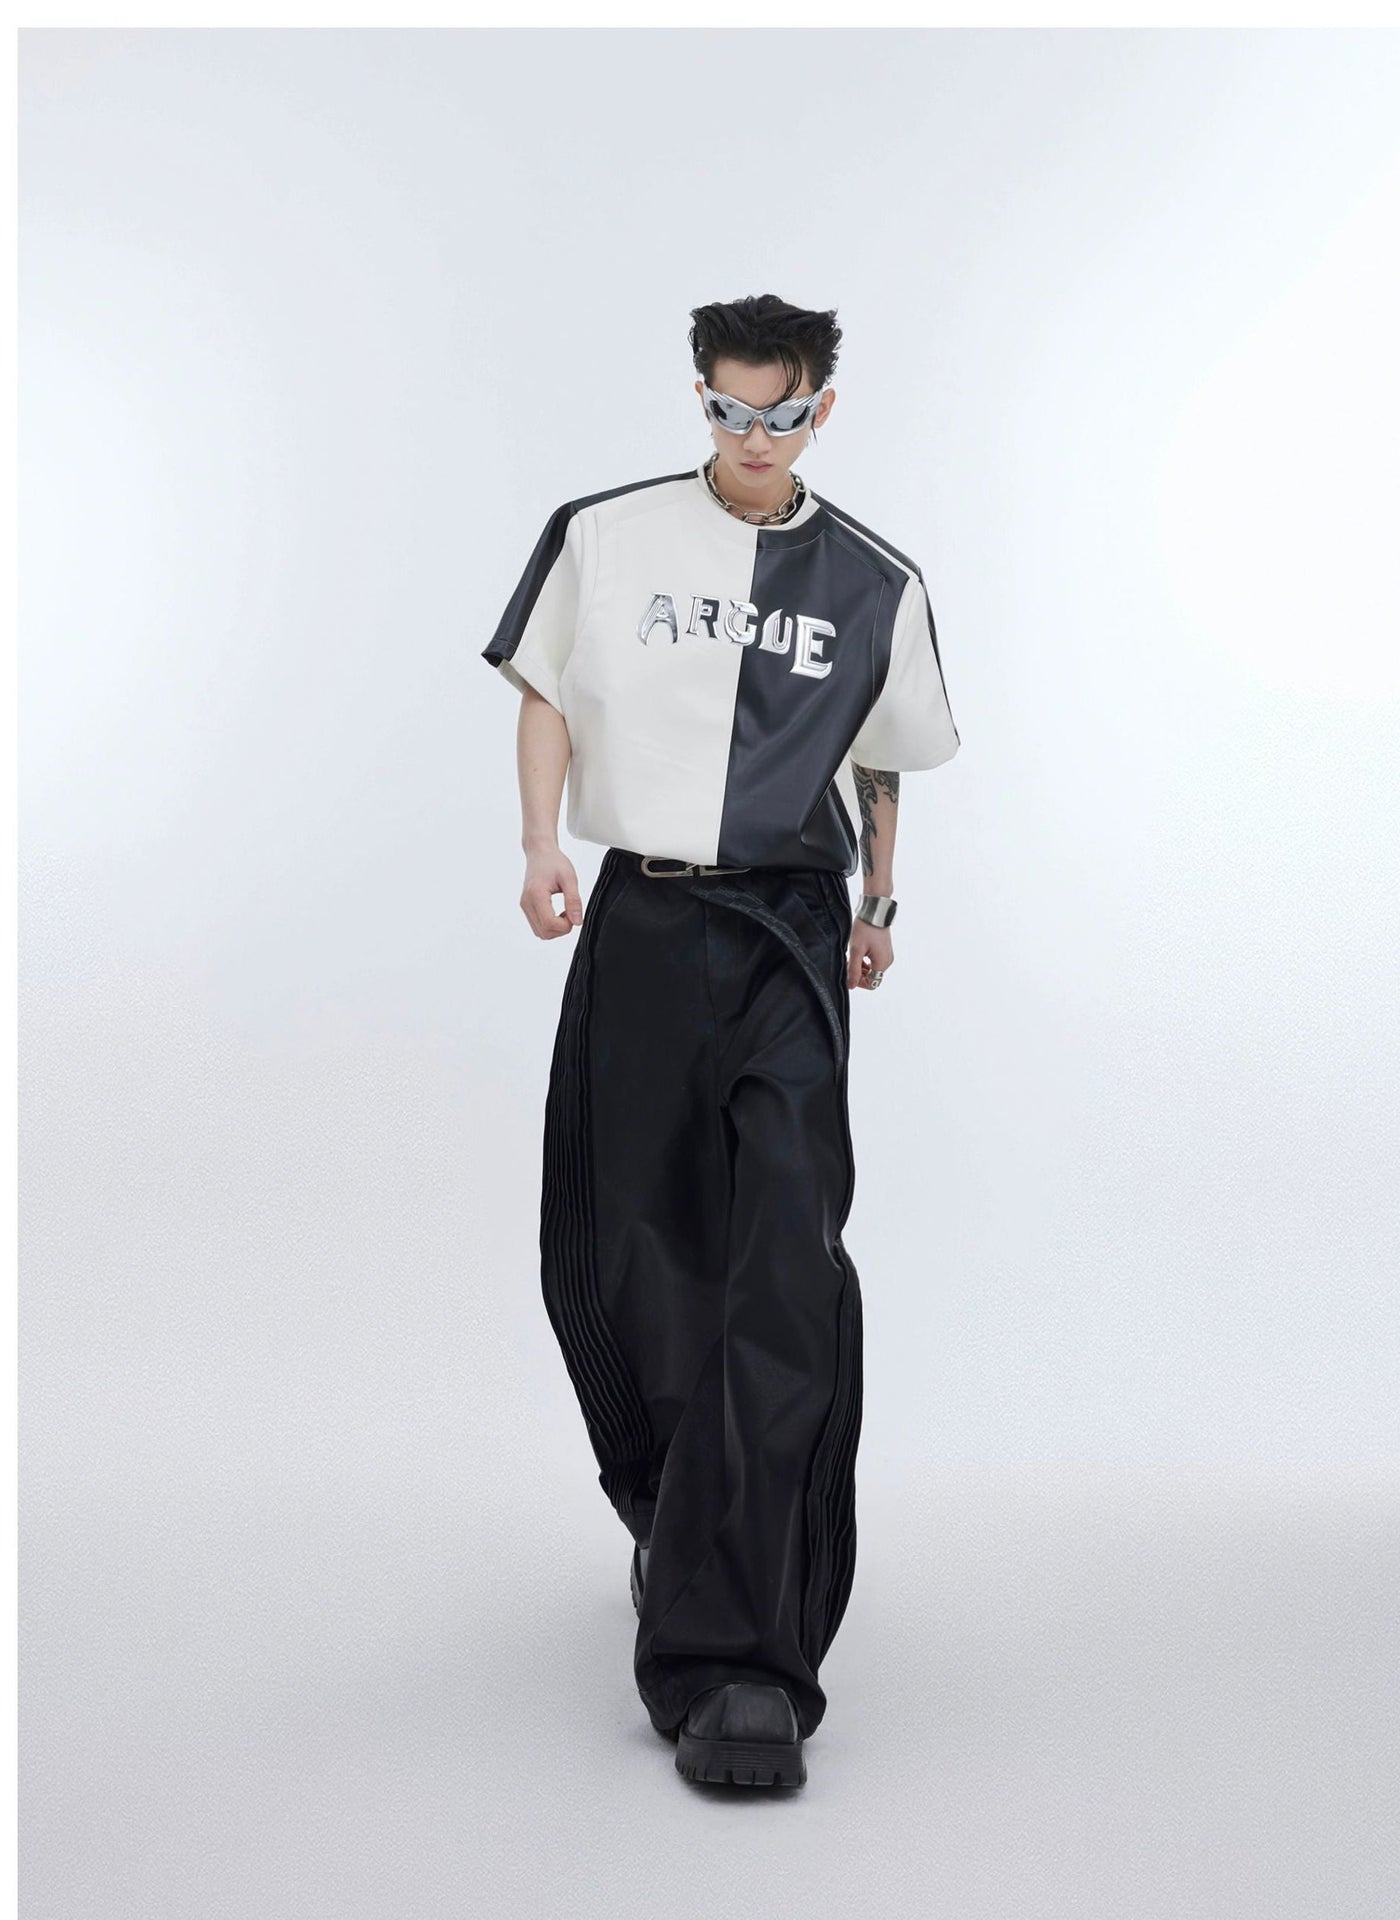 Spliced Faux Leather T-Shirt Korean Street Fashion T-Shirt By Argue Culture Shop Online at OH Vault